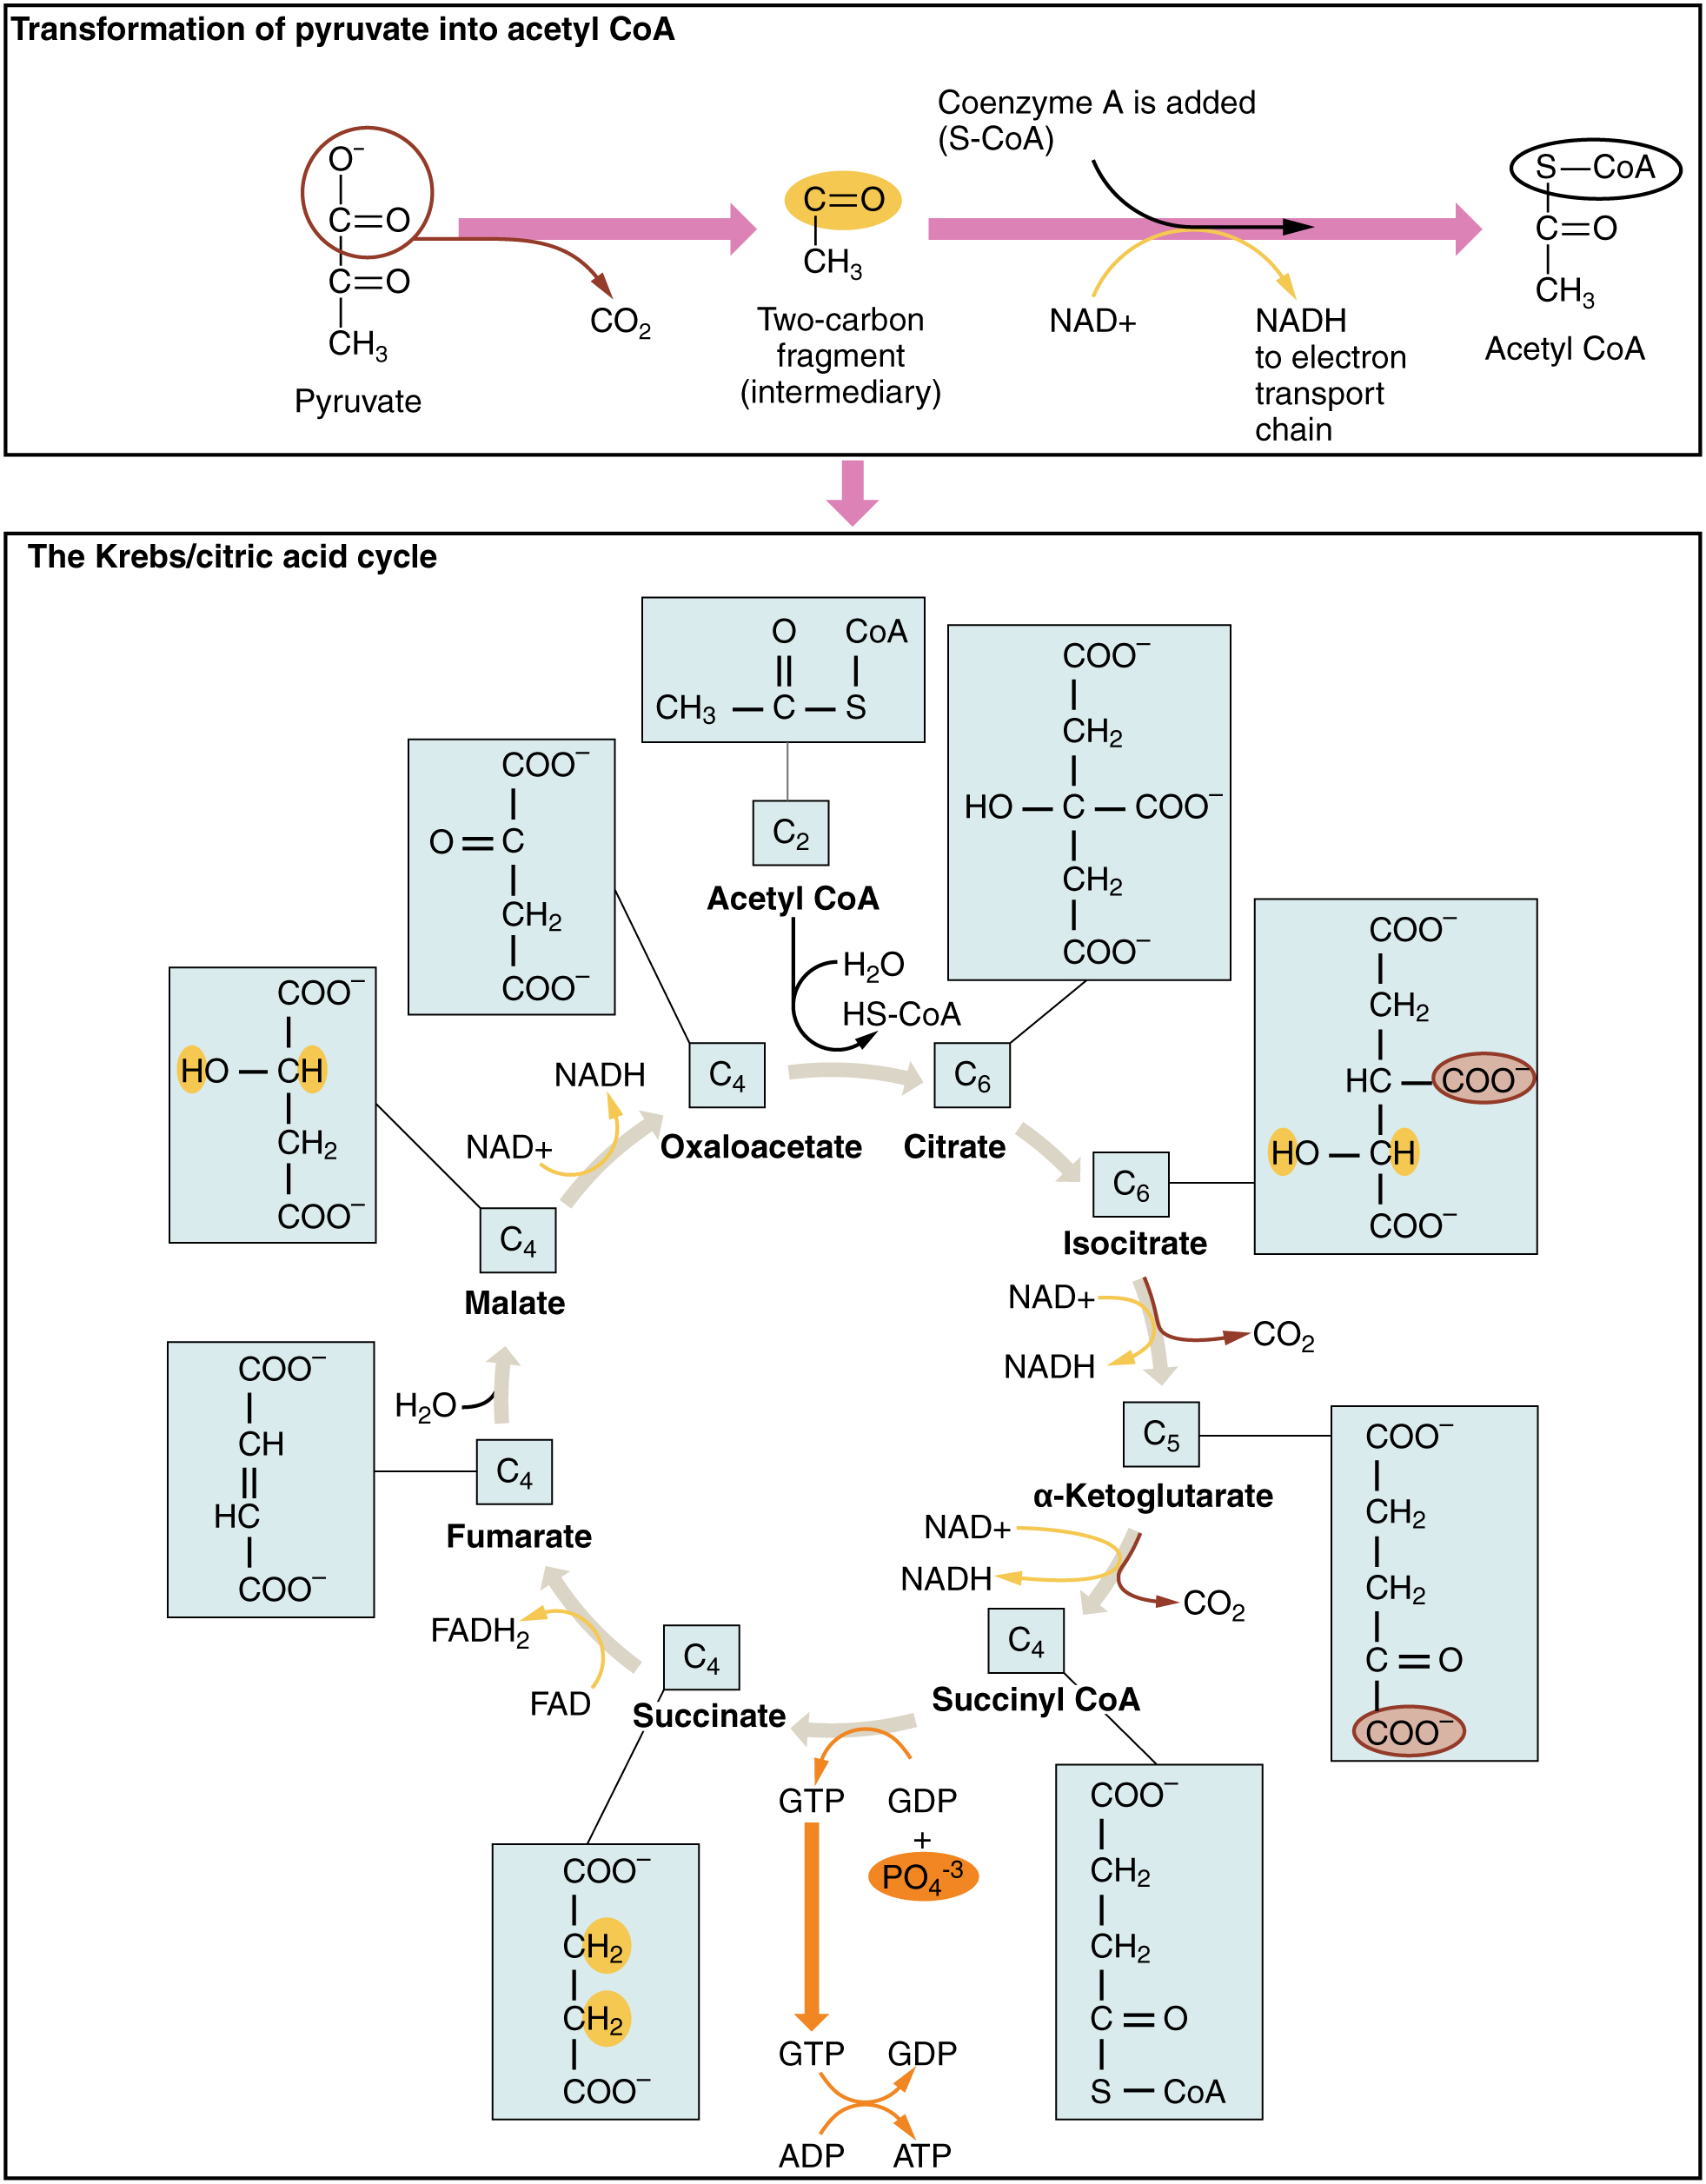 detailed cellular respiration diagram